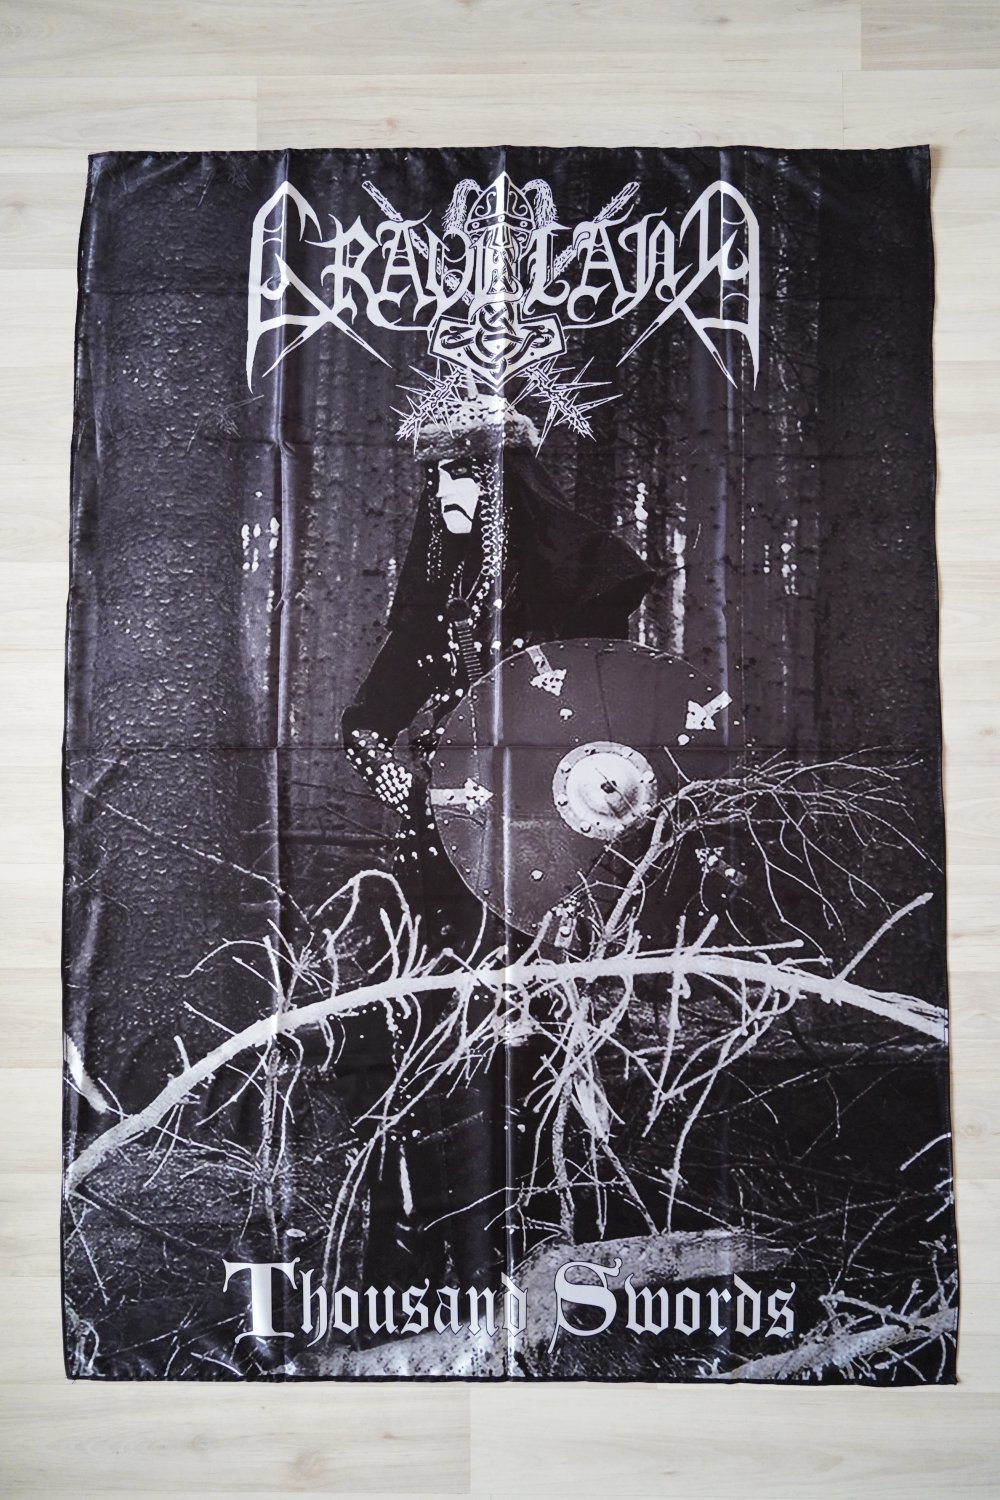 GRAVELAND - Thousand swords FLAG Black metal cloth poster Norwegian metal